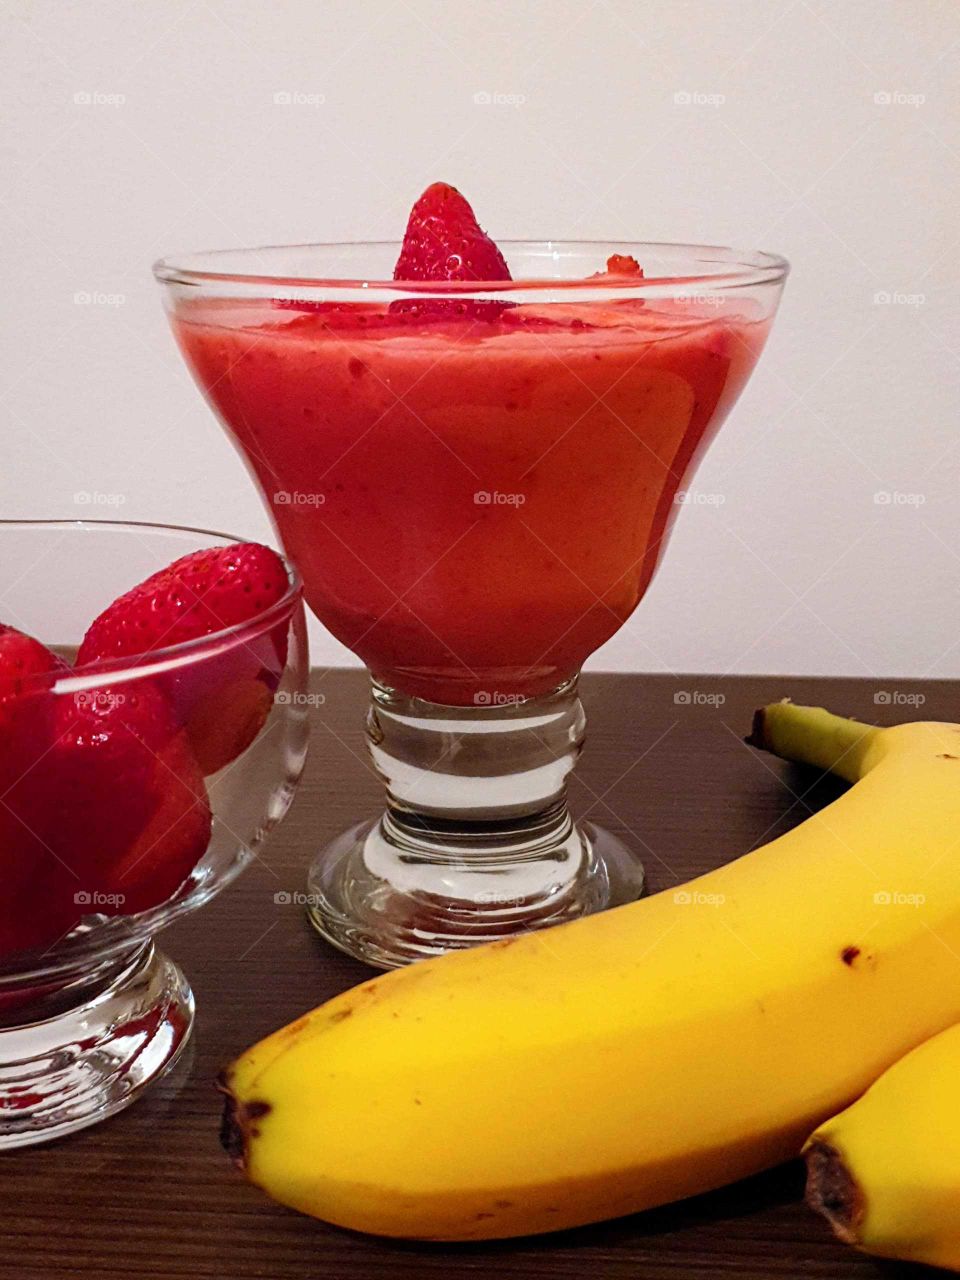 Banana strawberry smoothie